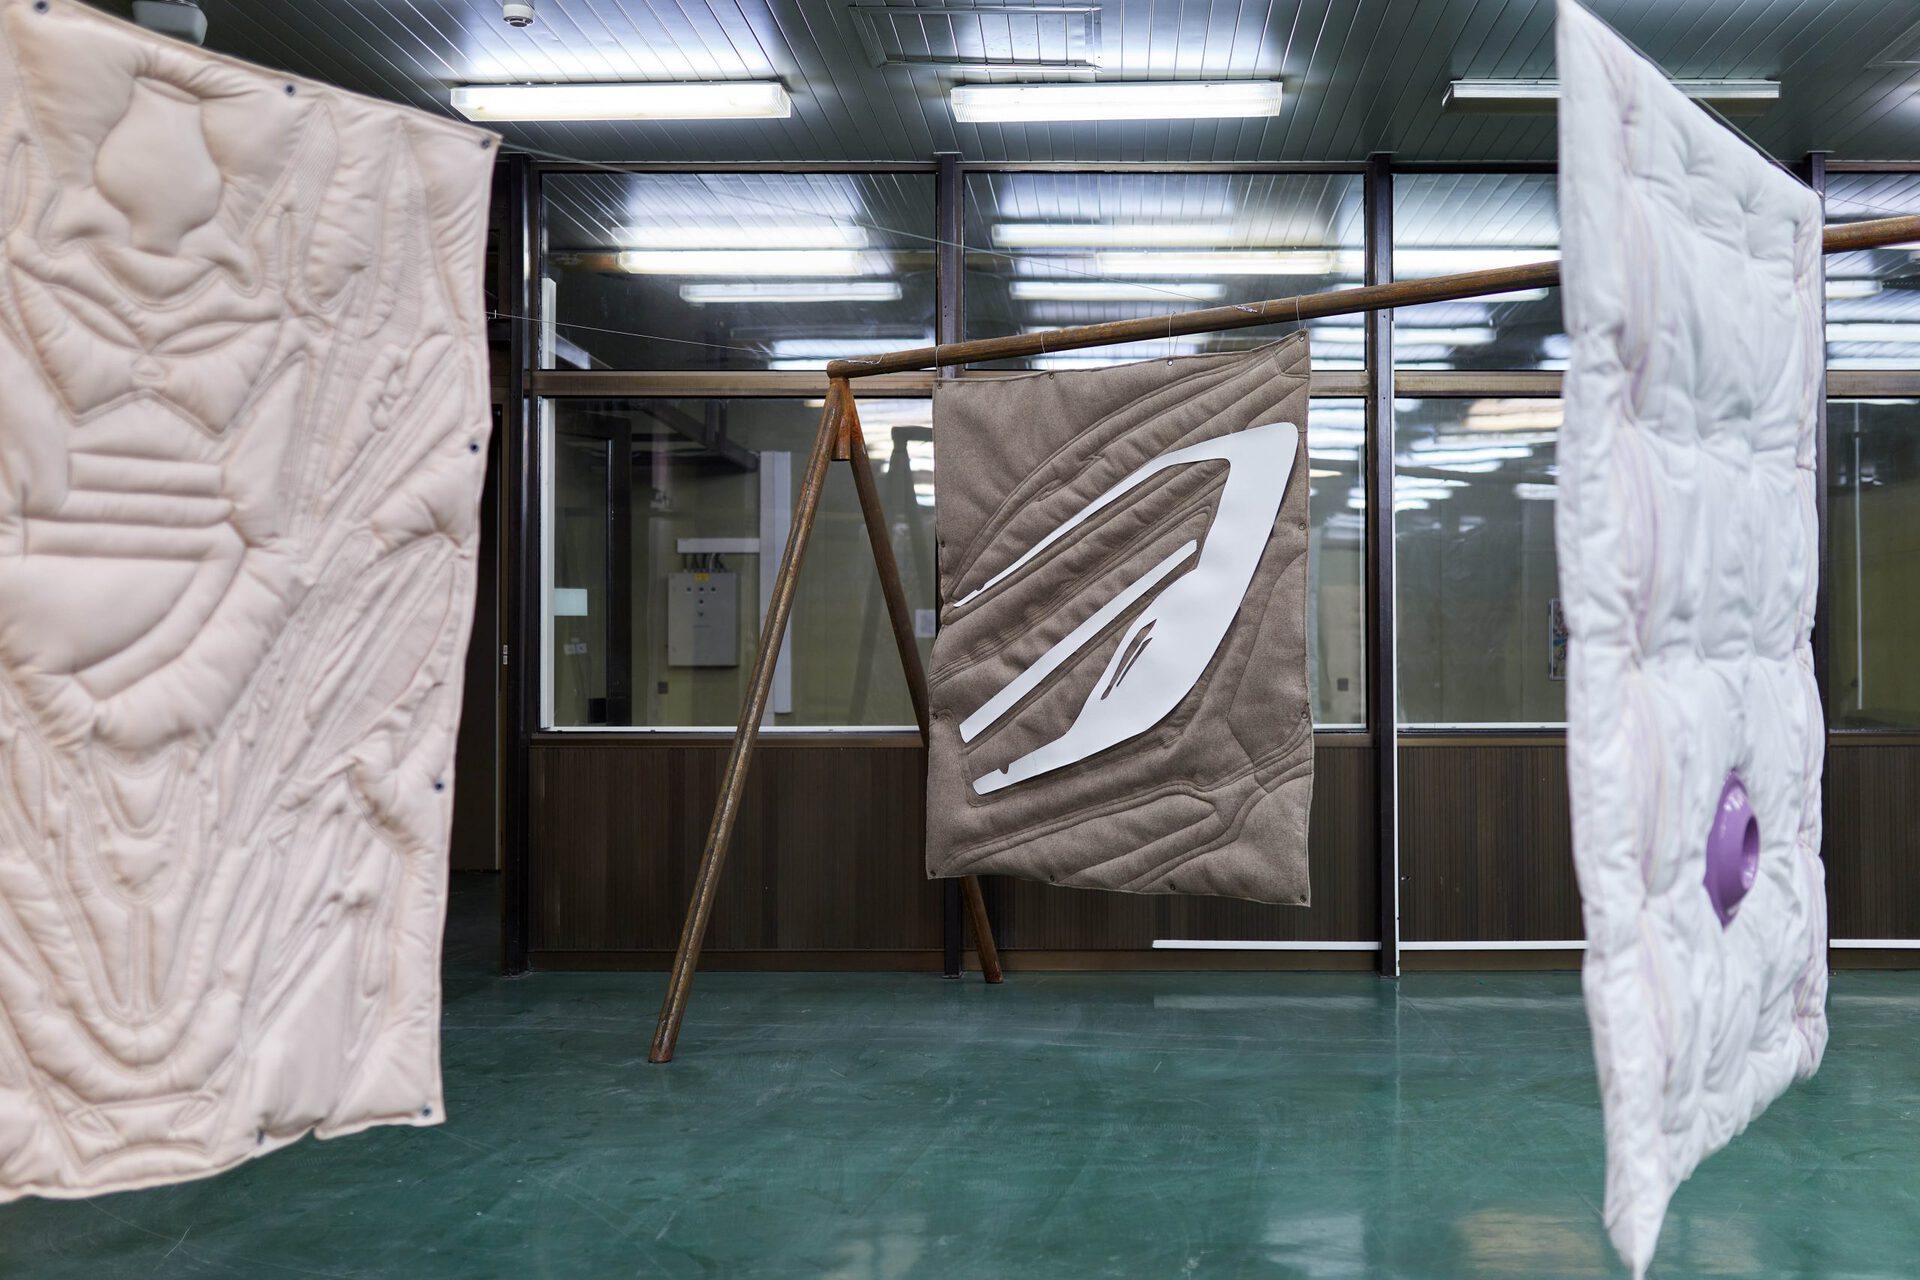 Adrian Kiss, Dunyha Kocsi, 2021, Quilted felt, leather, 190 × 140 cm